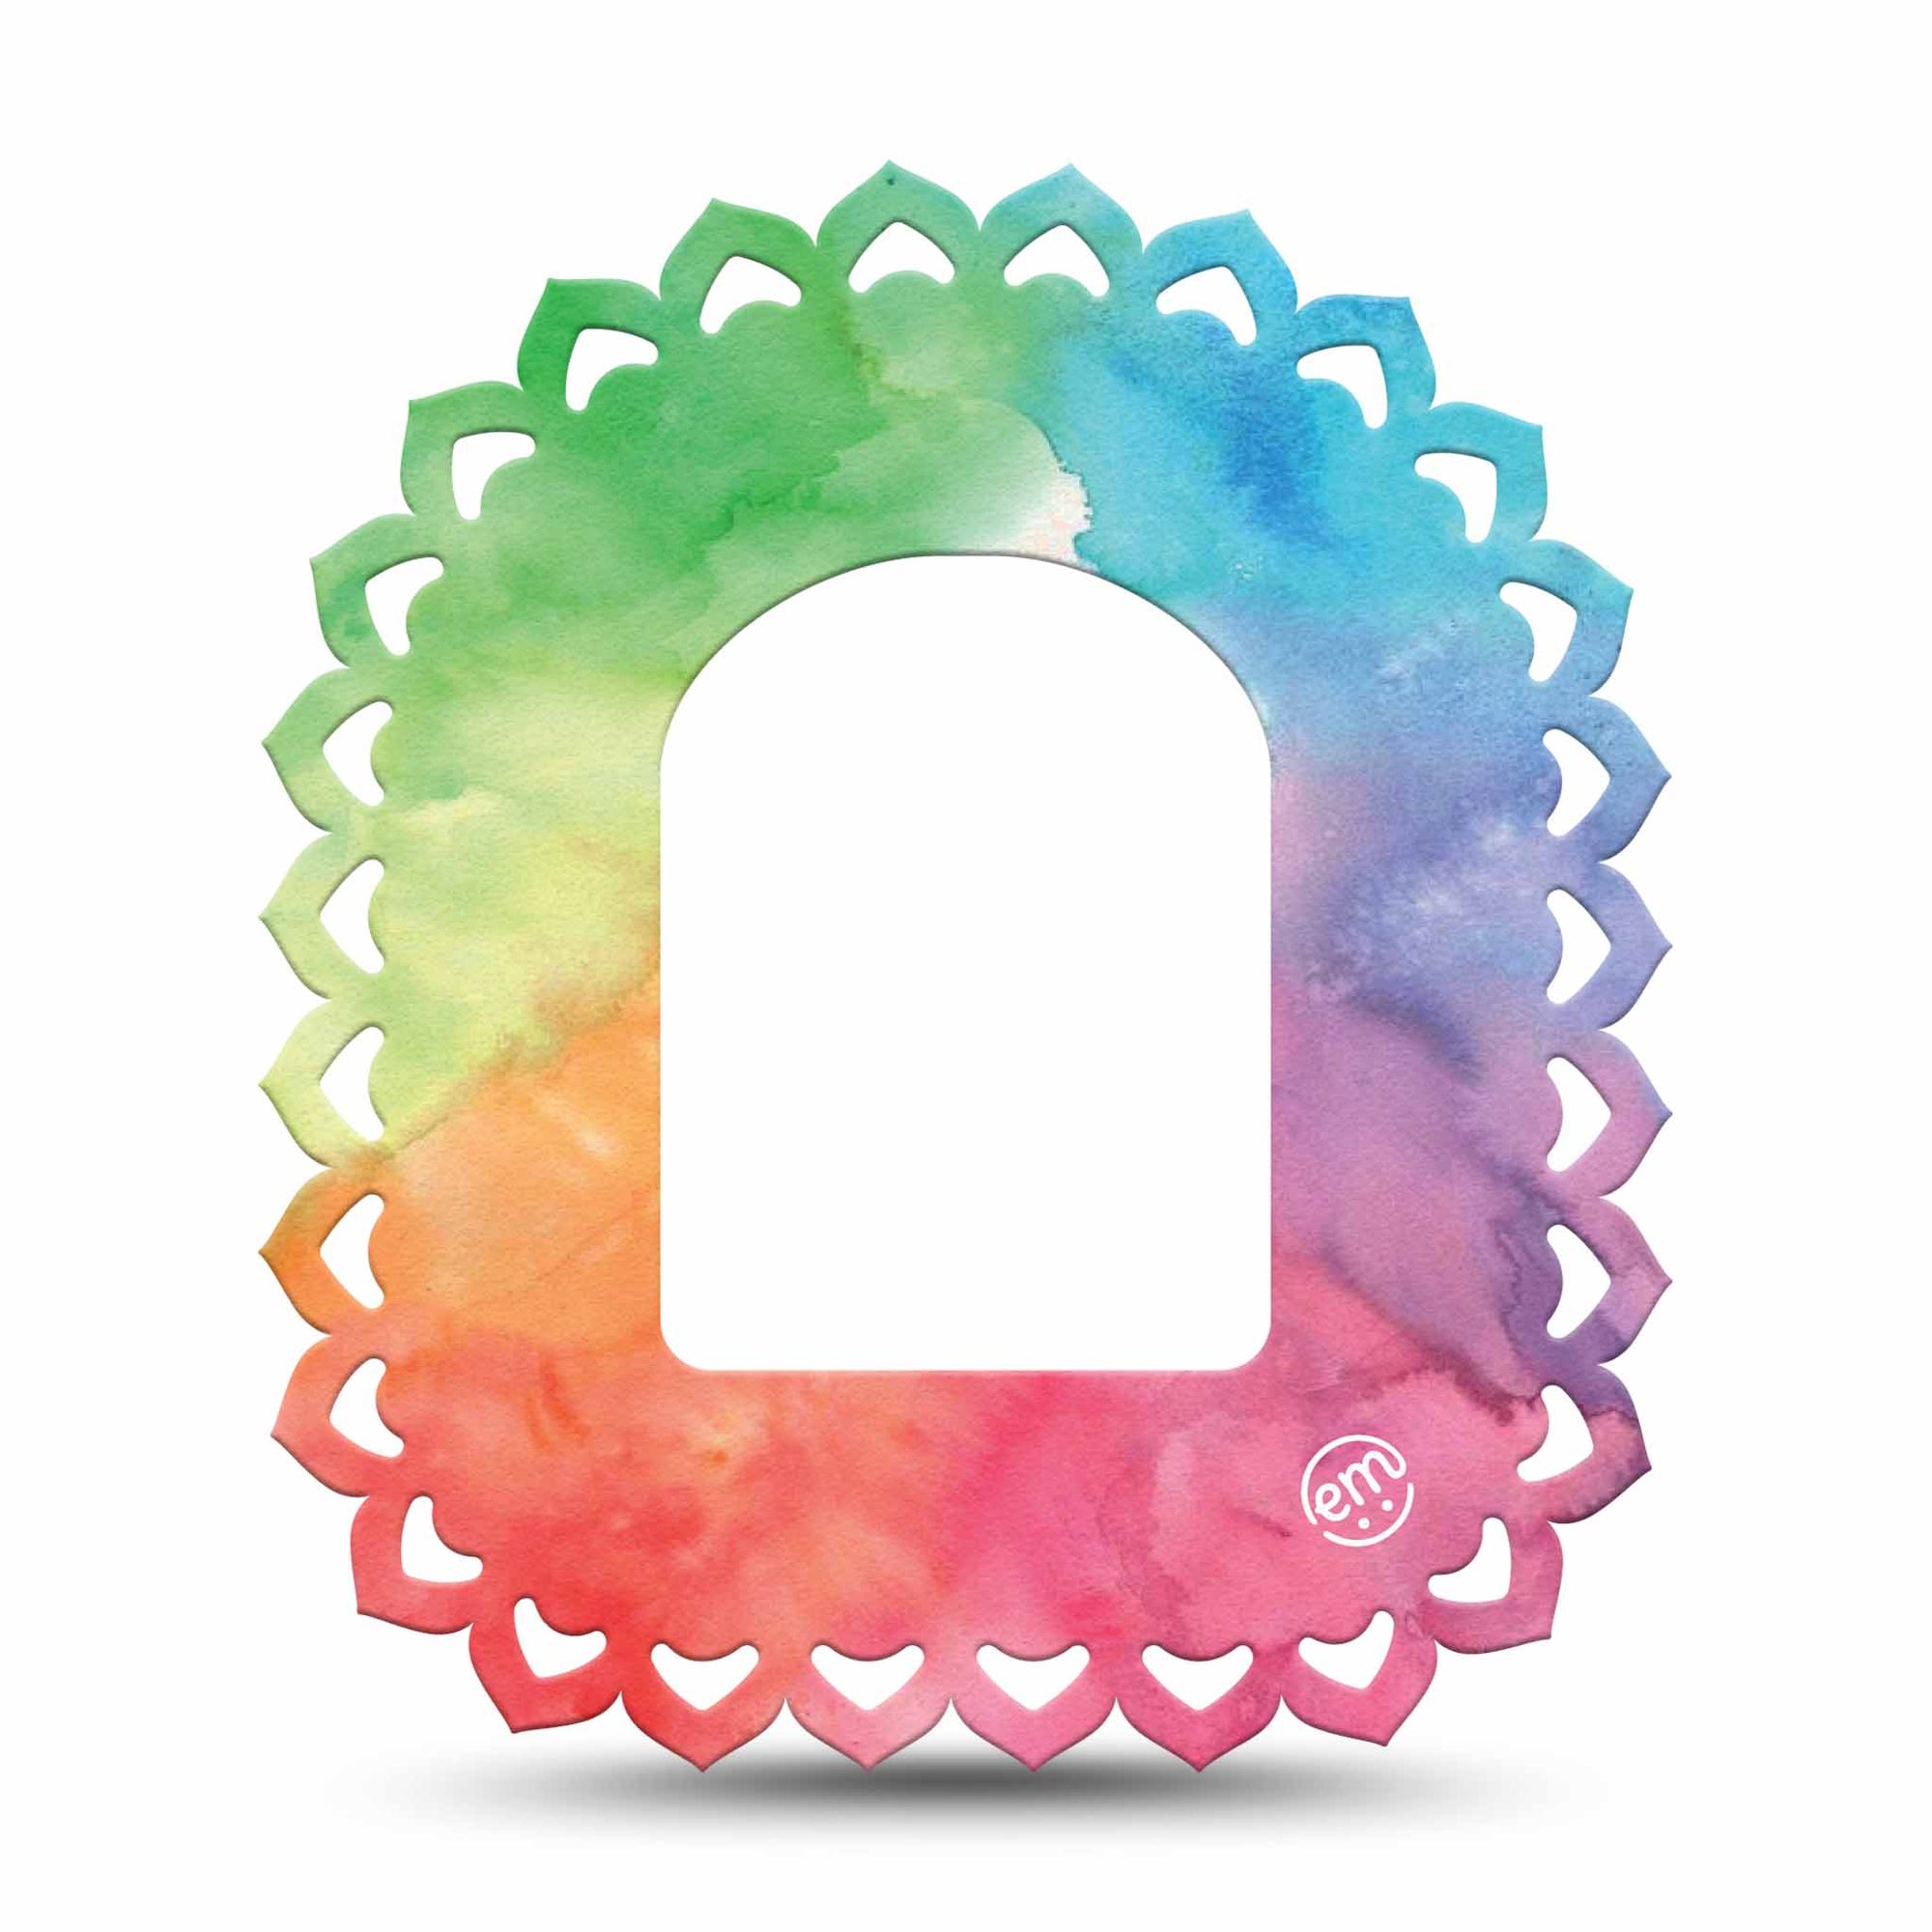 ExpressionMed Rainbow Clouds Pod Mandala Tape colorful zen art patch design